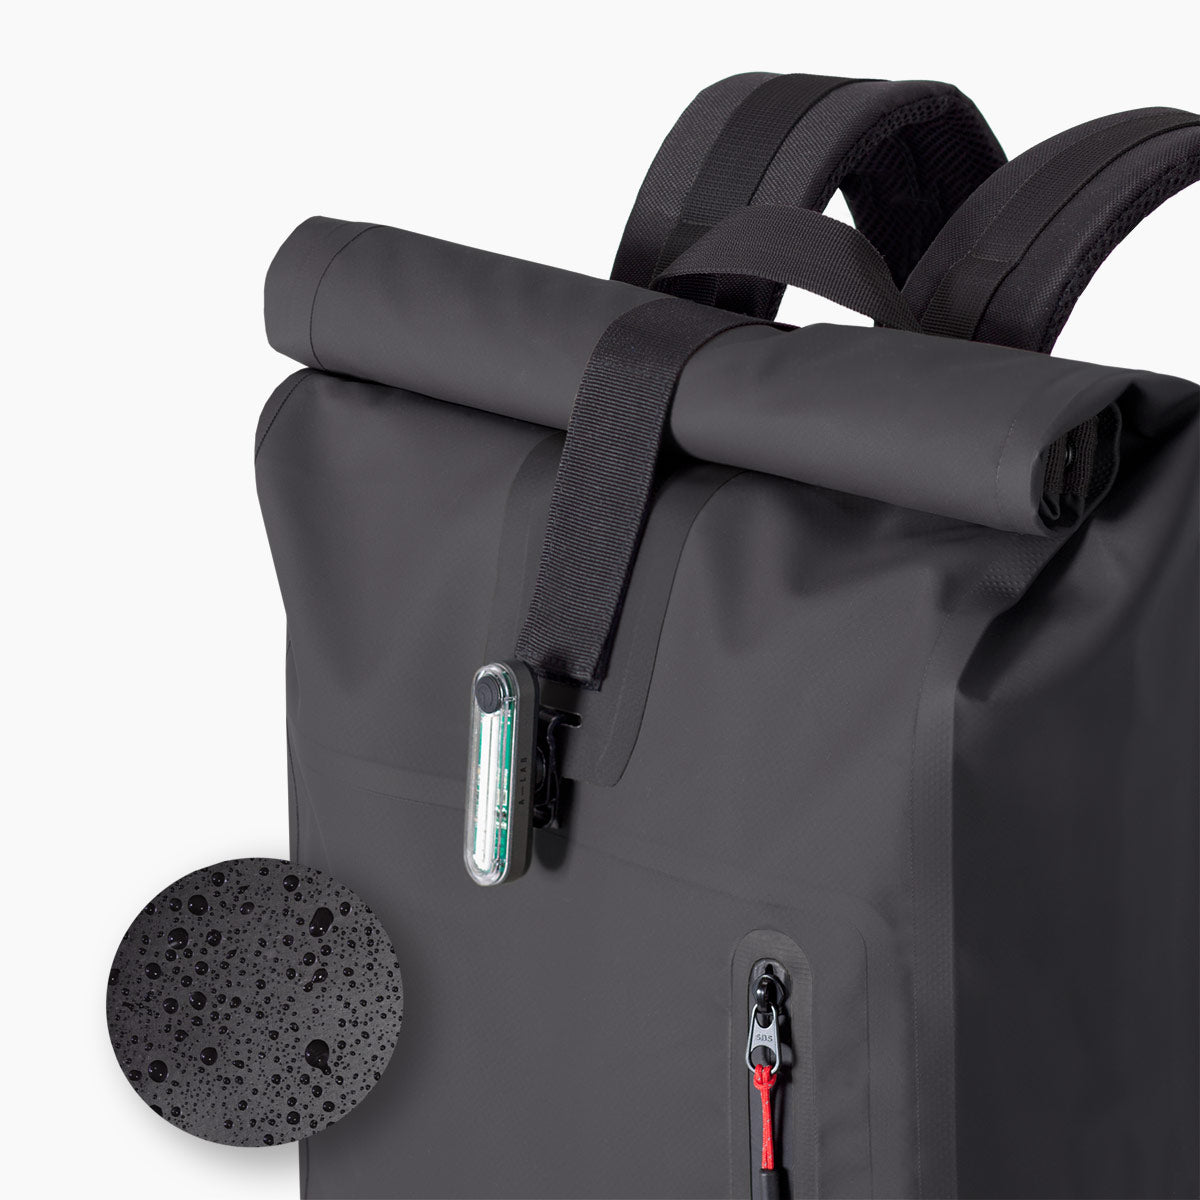 Model A • Backpack • Medium • Black